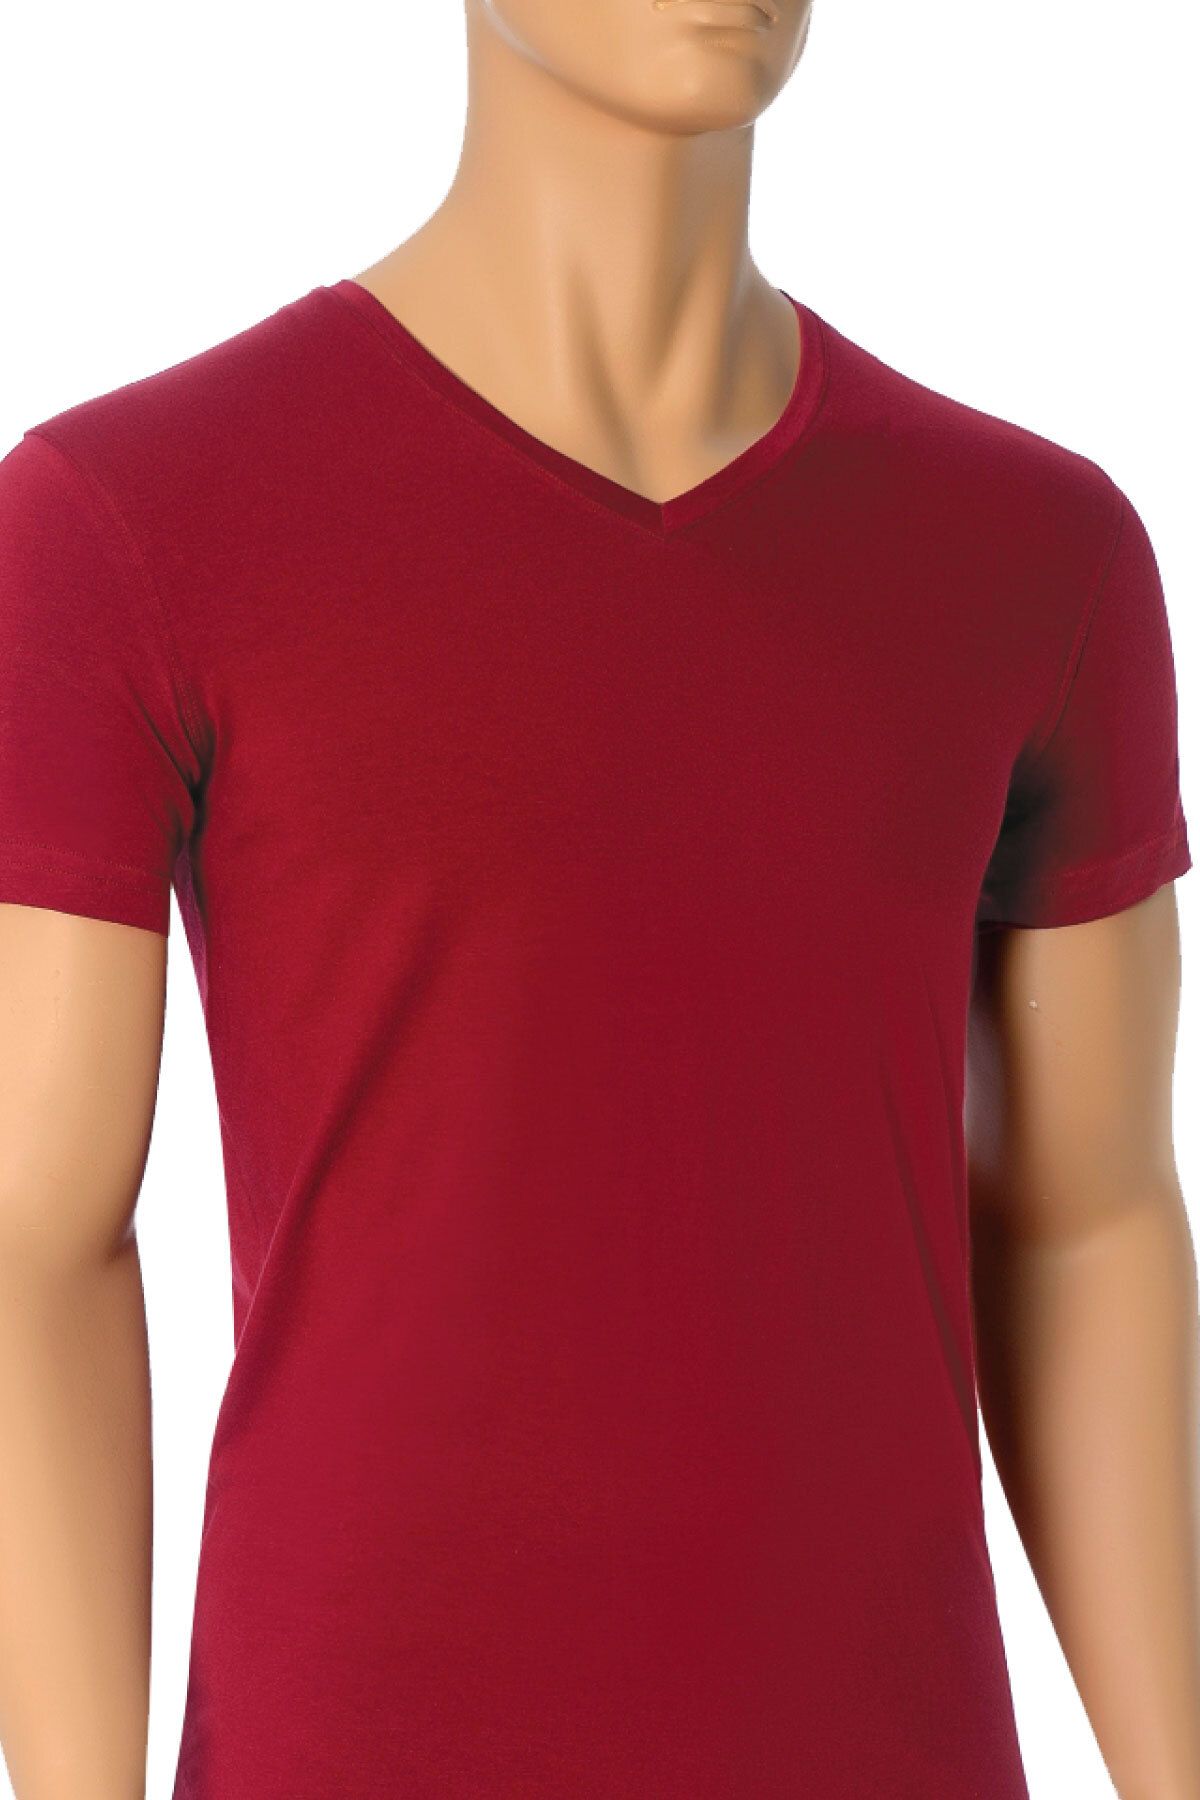 Öts 2'li Erkek Modal V Yaka T-shirt Kırmızı